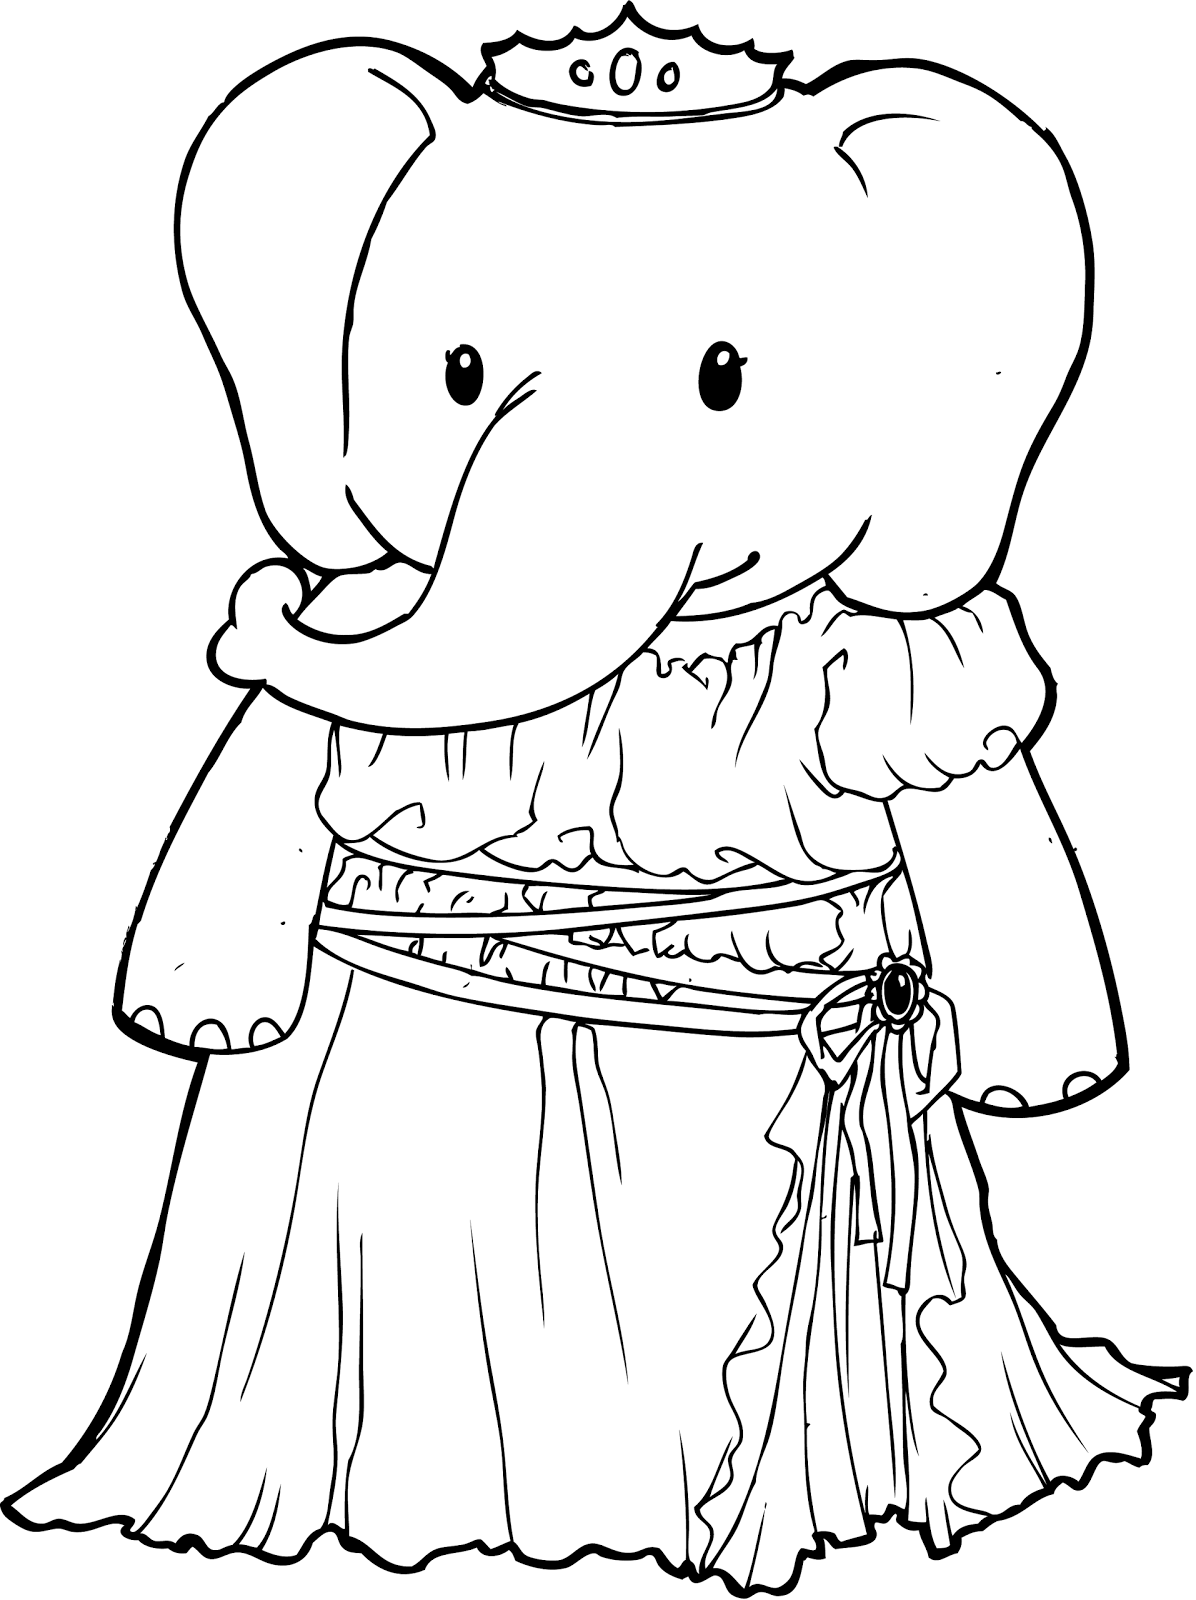 Elephant Princess Coloring Page